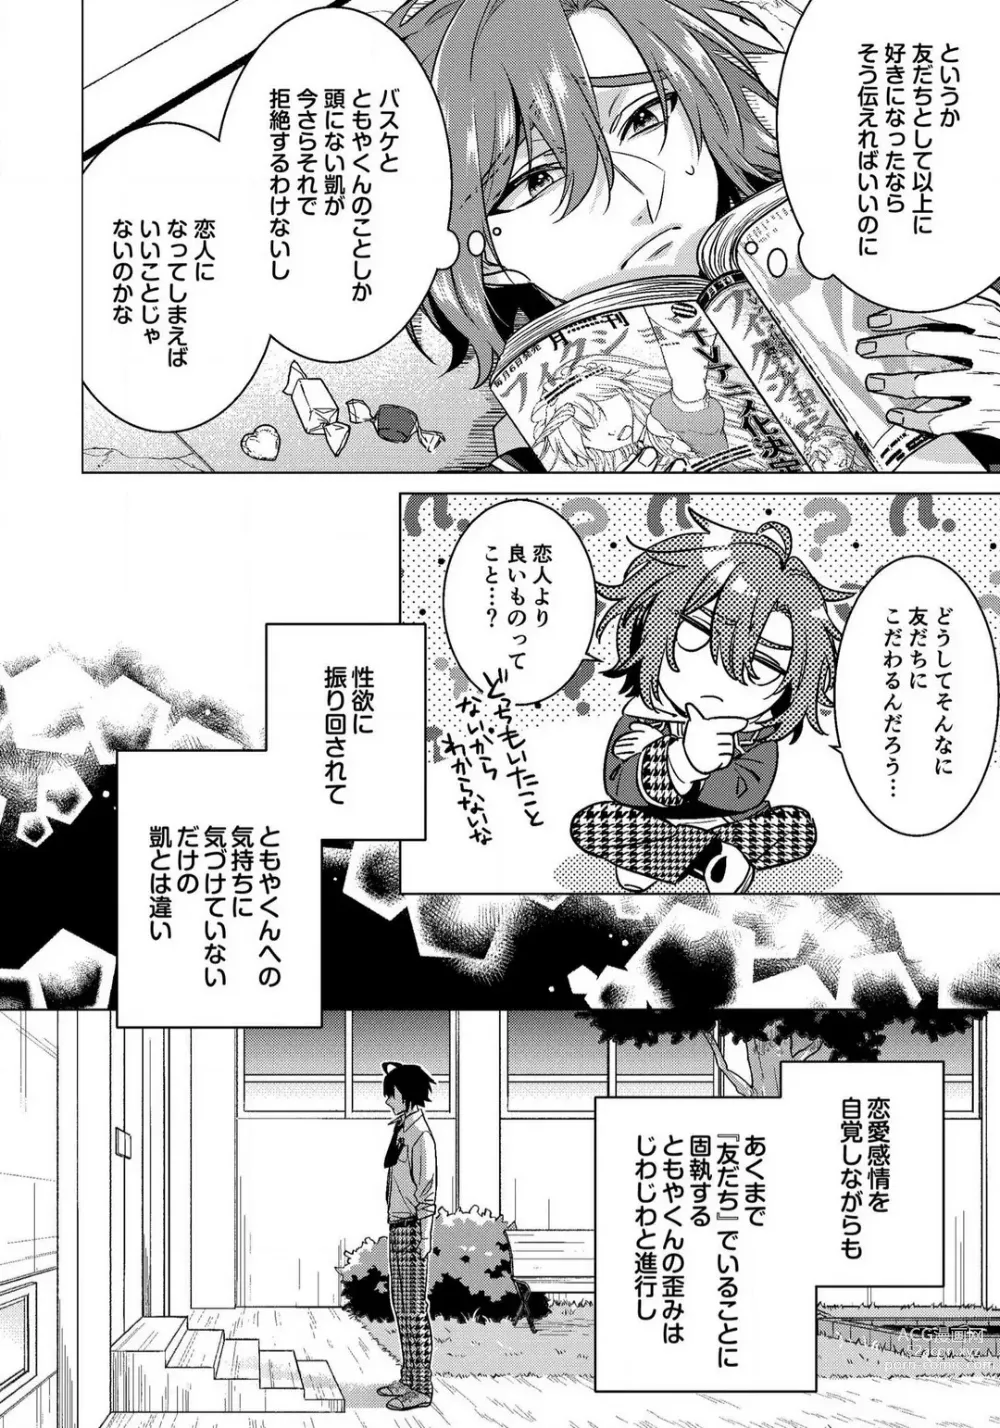 Page 57 of manga Ijimerare - Onna